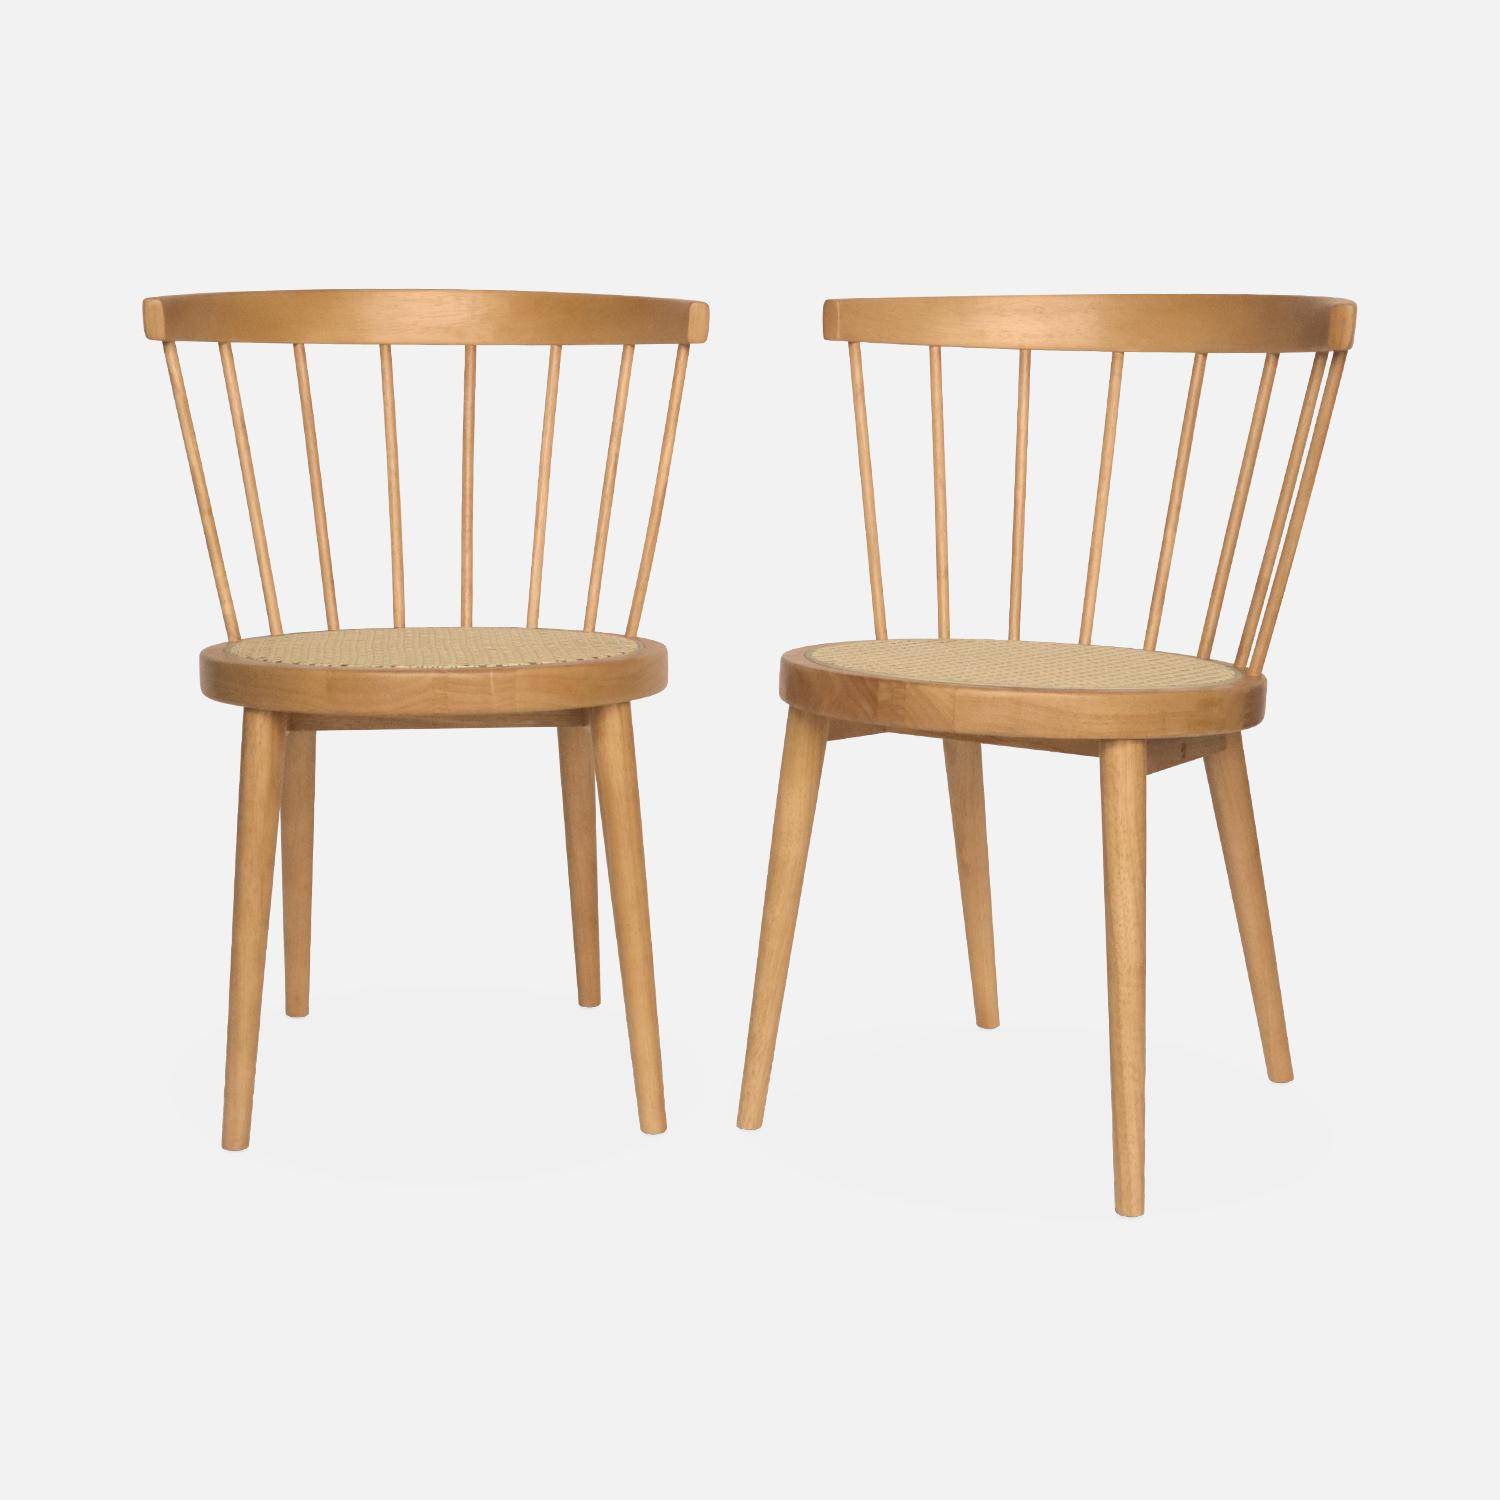 Pair of  Wood and Cane Chairs, Bohemian Spirit, Natural, L53 x W53.5 x H 6 cm,sweeek,Photo4